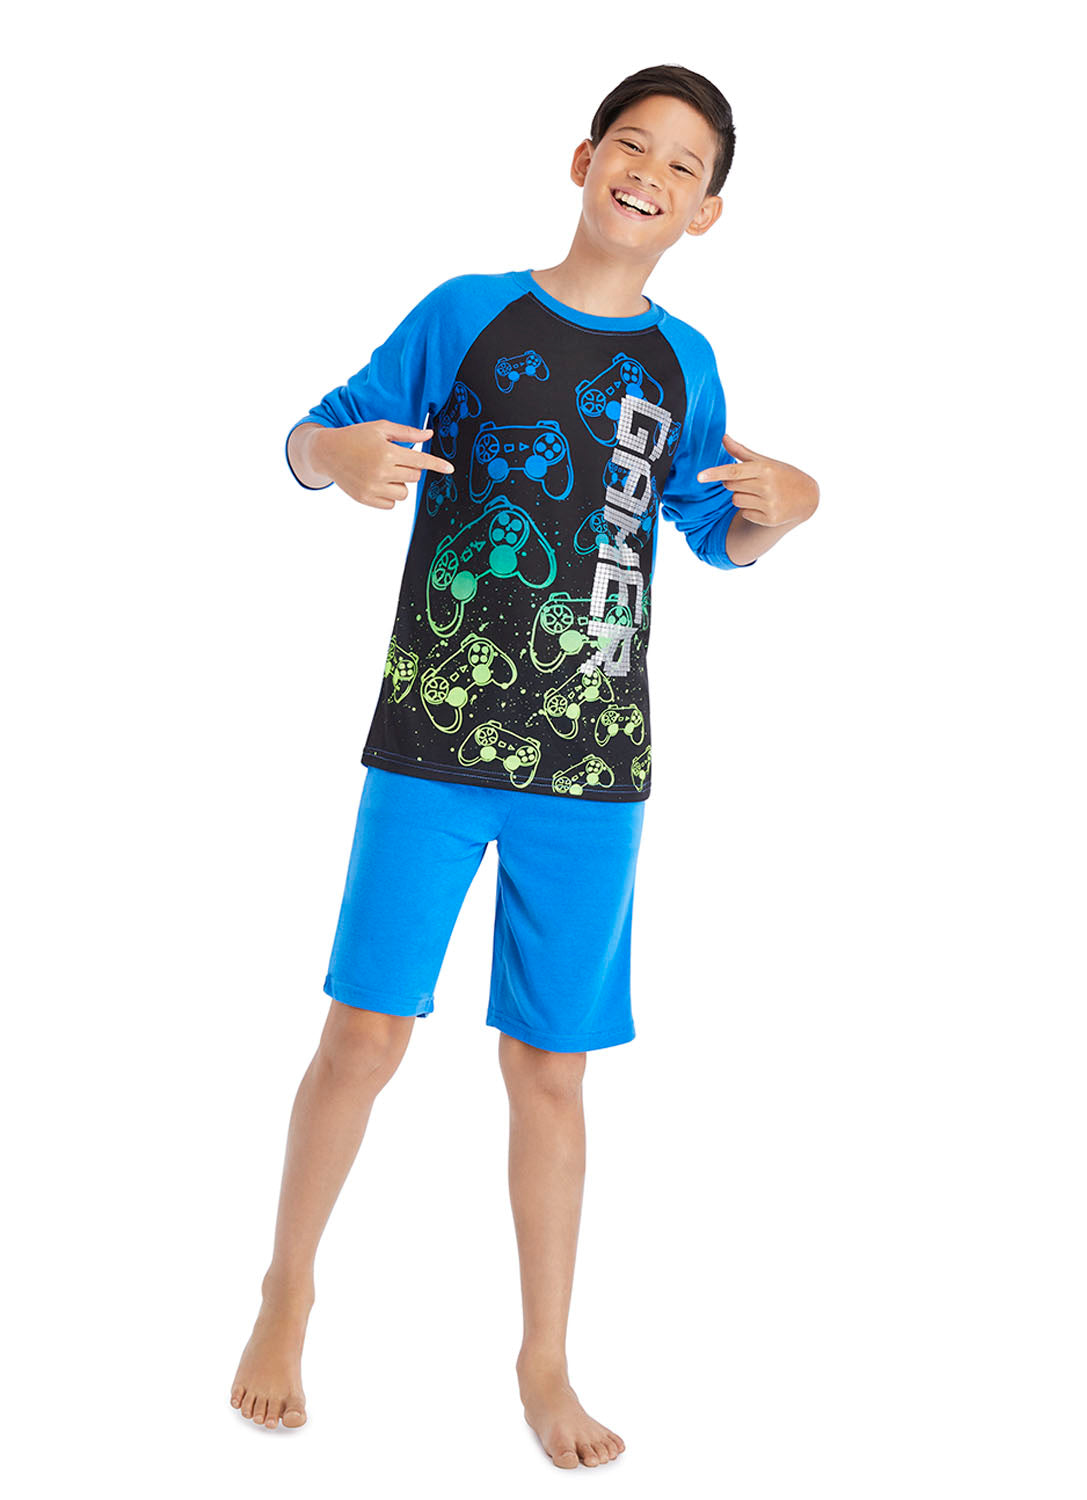 Boy wearing a Gamer Pajama Set, t-shirt and shorts in Royal colour